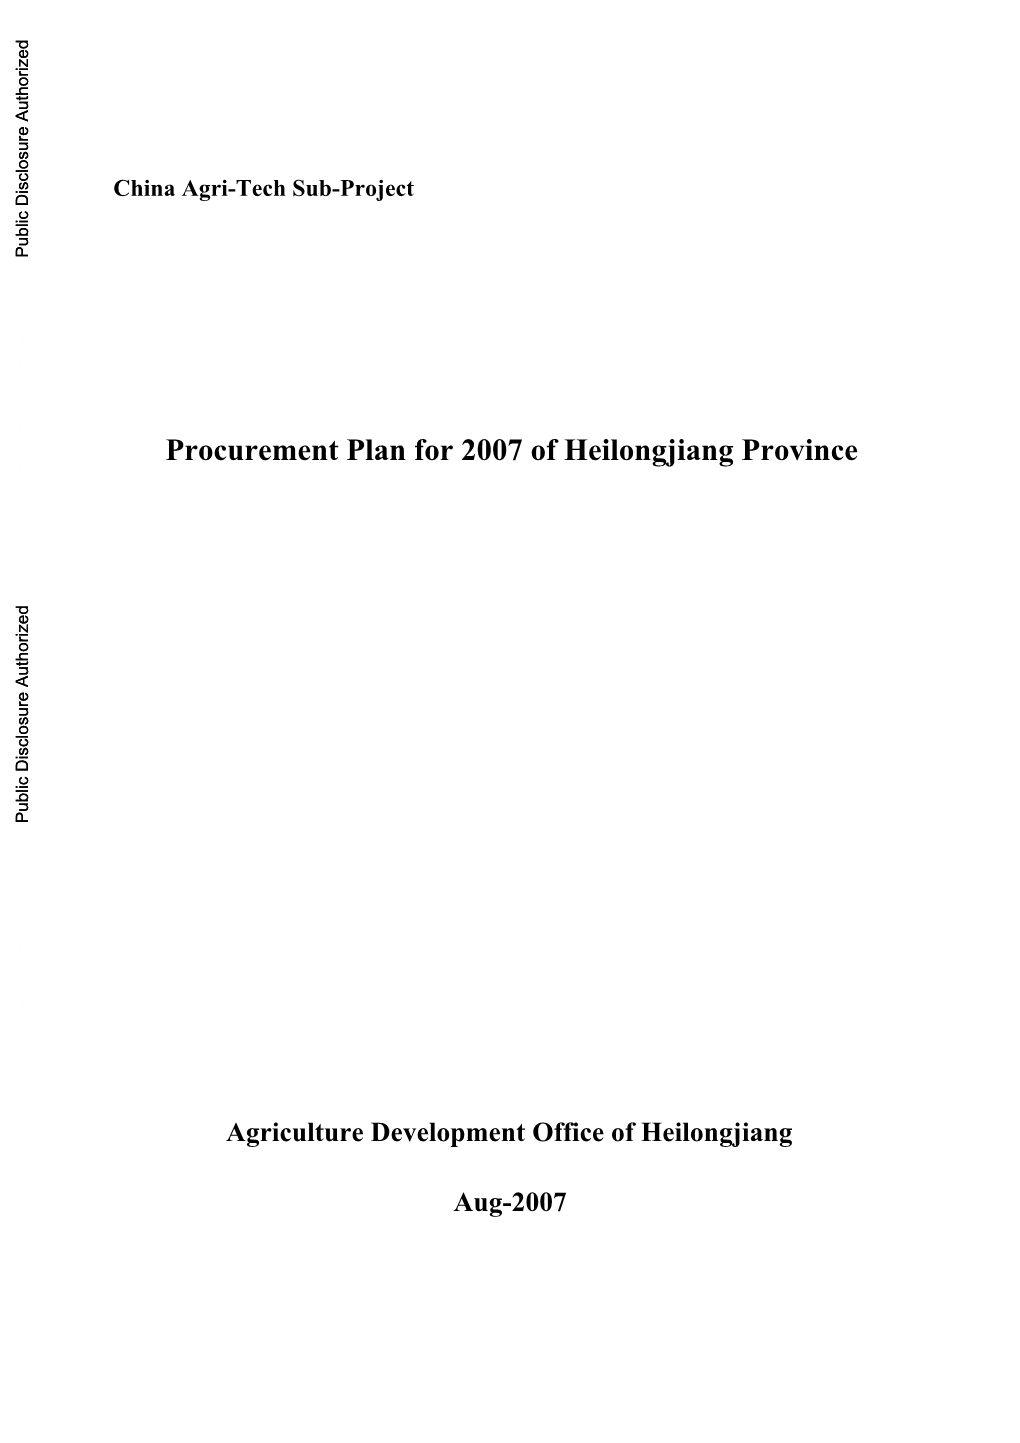 Procurement Plan for 2007 of Heilongjiang Province Agriculture